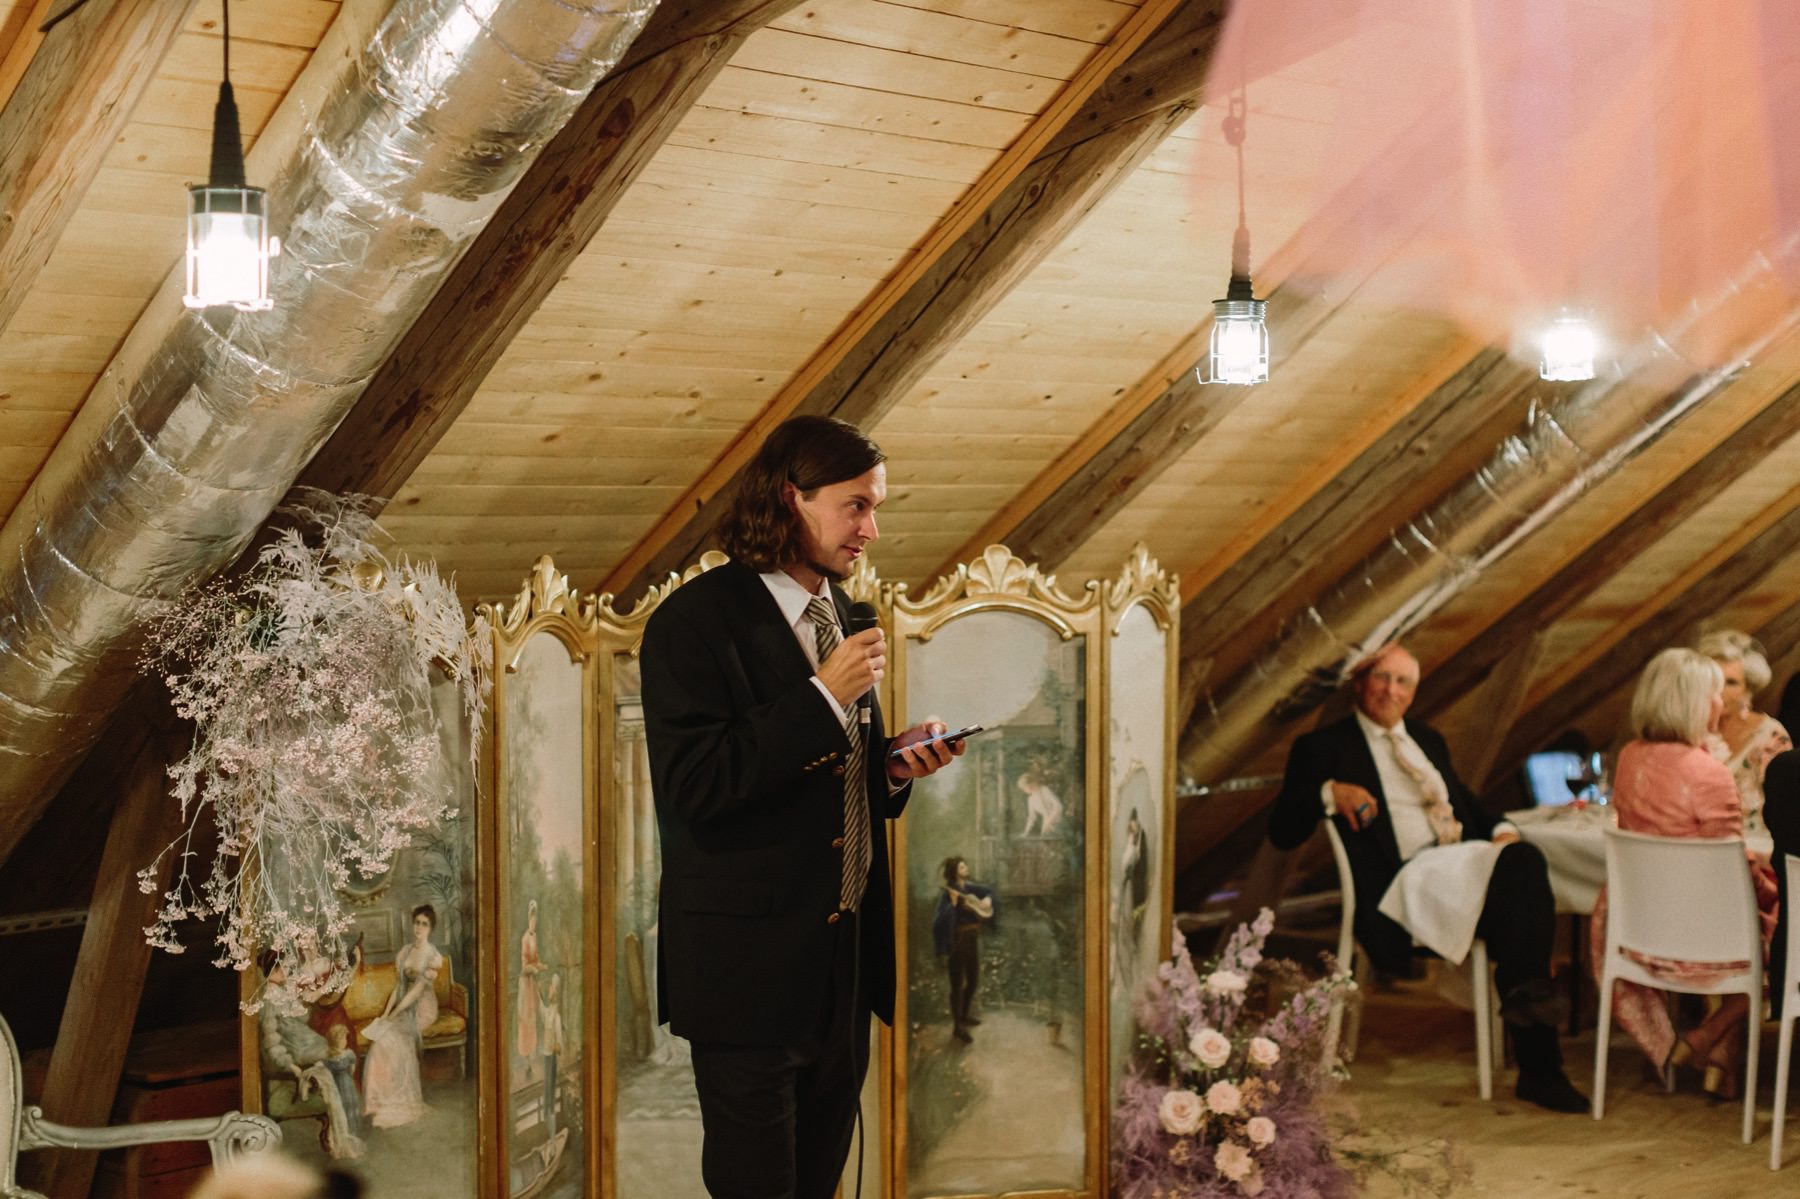 wedding in a private barn